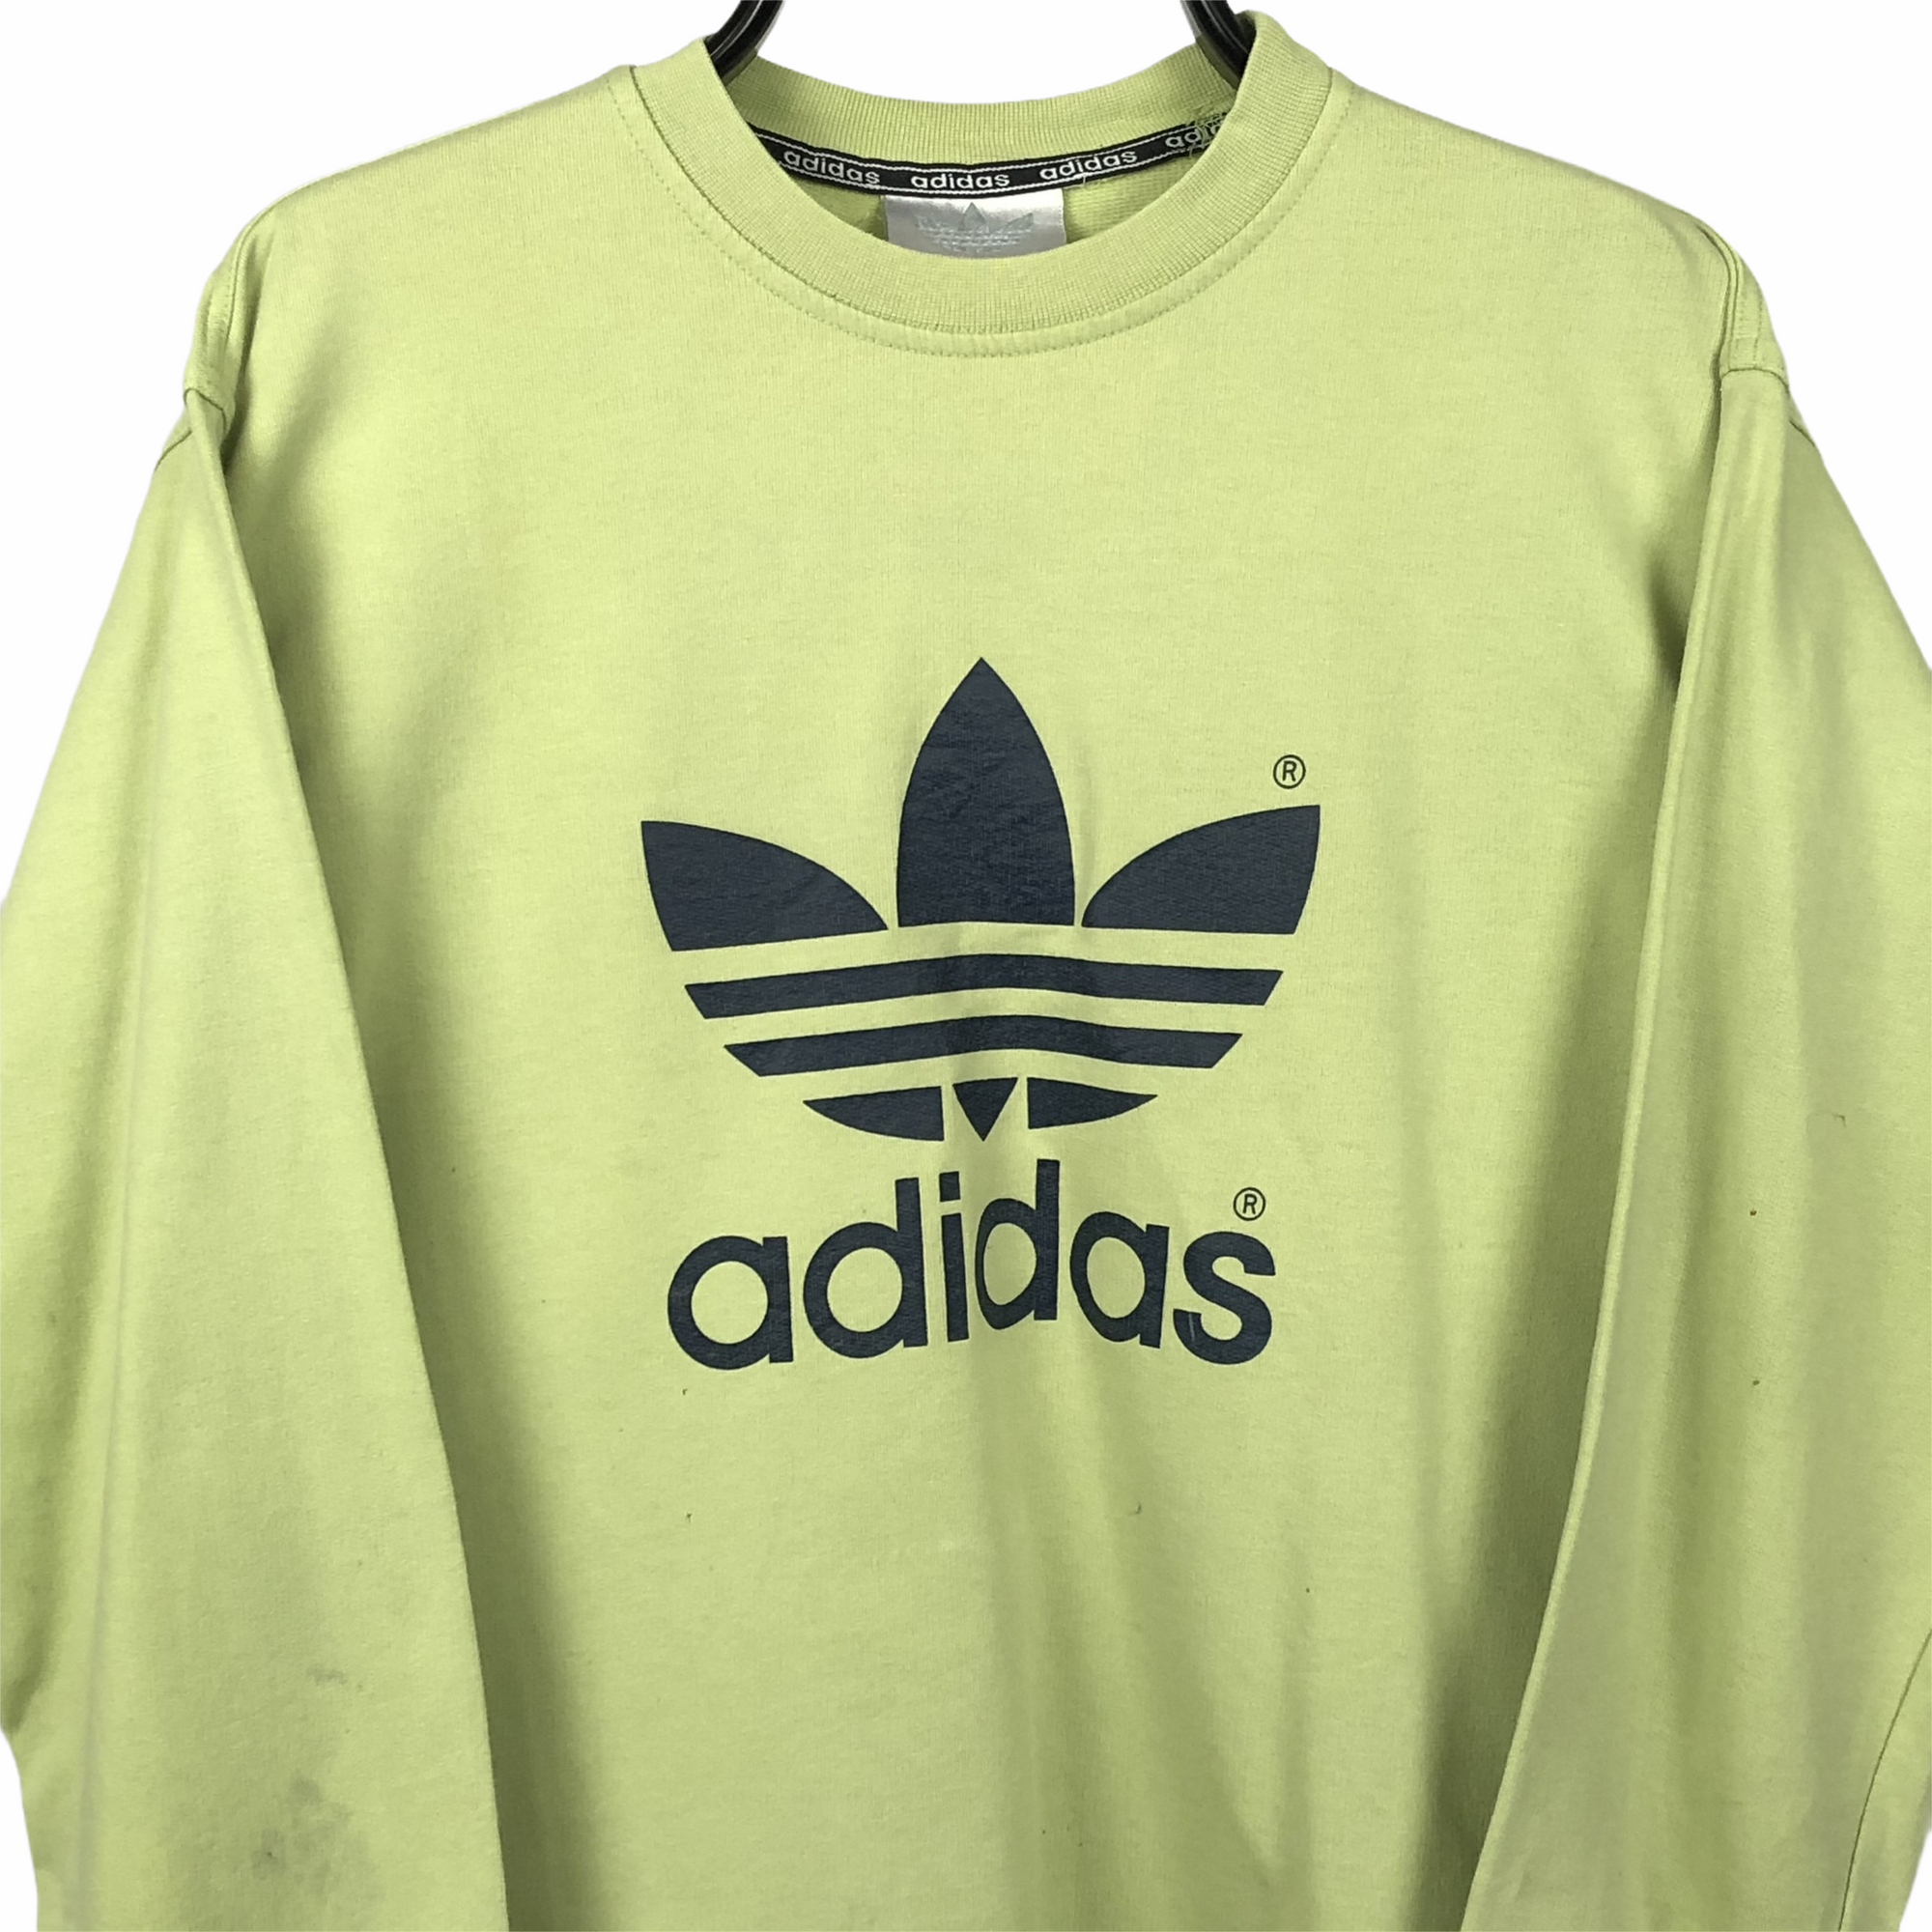 Adidas Sweatshirt in Pistachio Green - Men's Small/Women's Medium